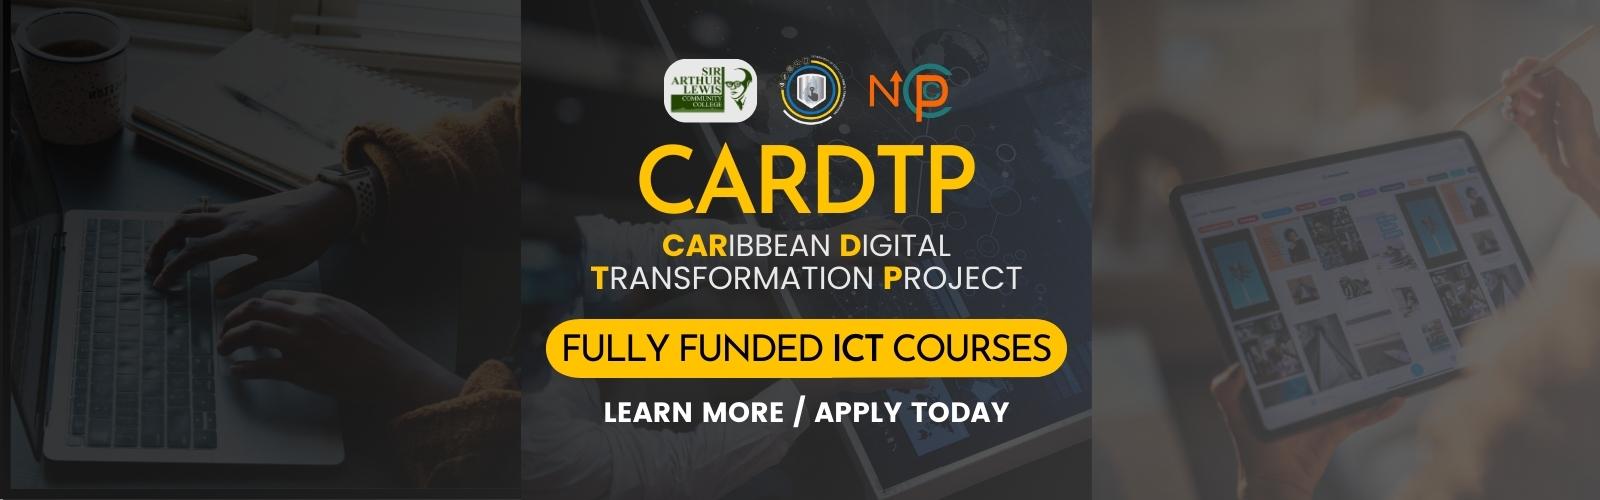 Caribbean Digital Transformation Project